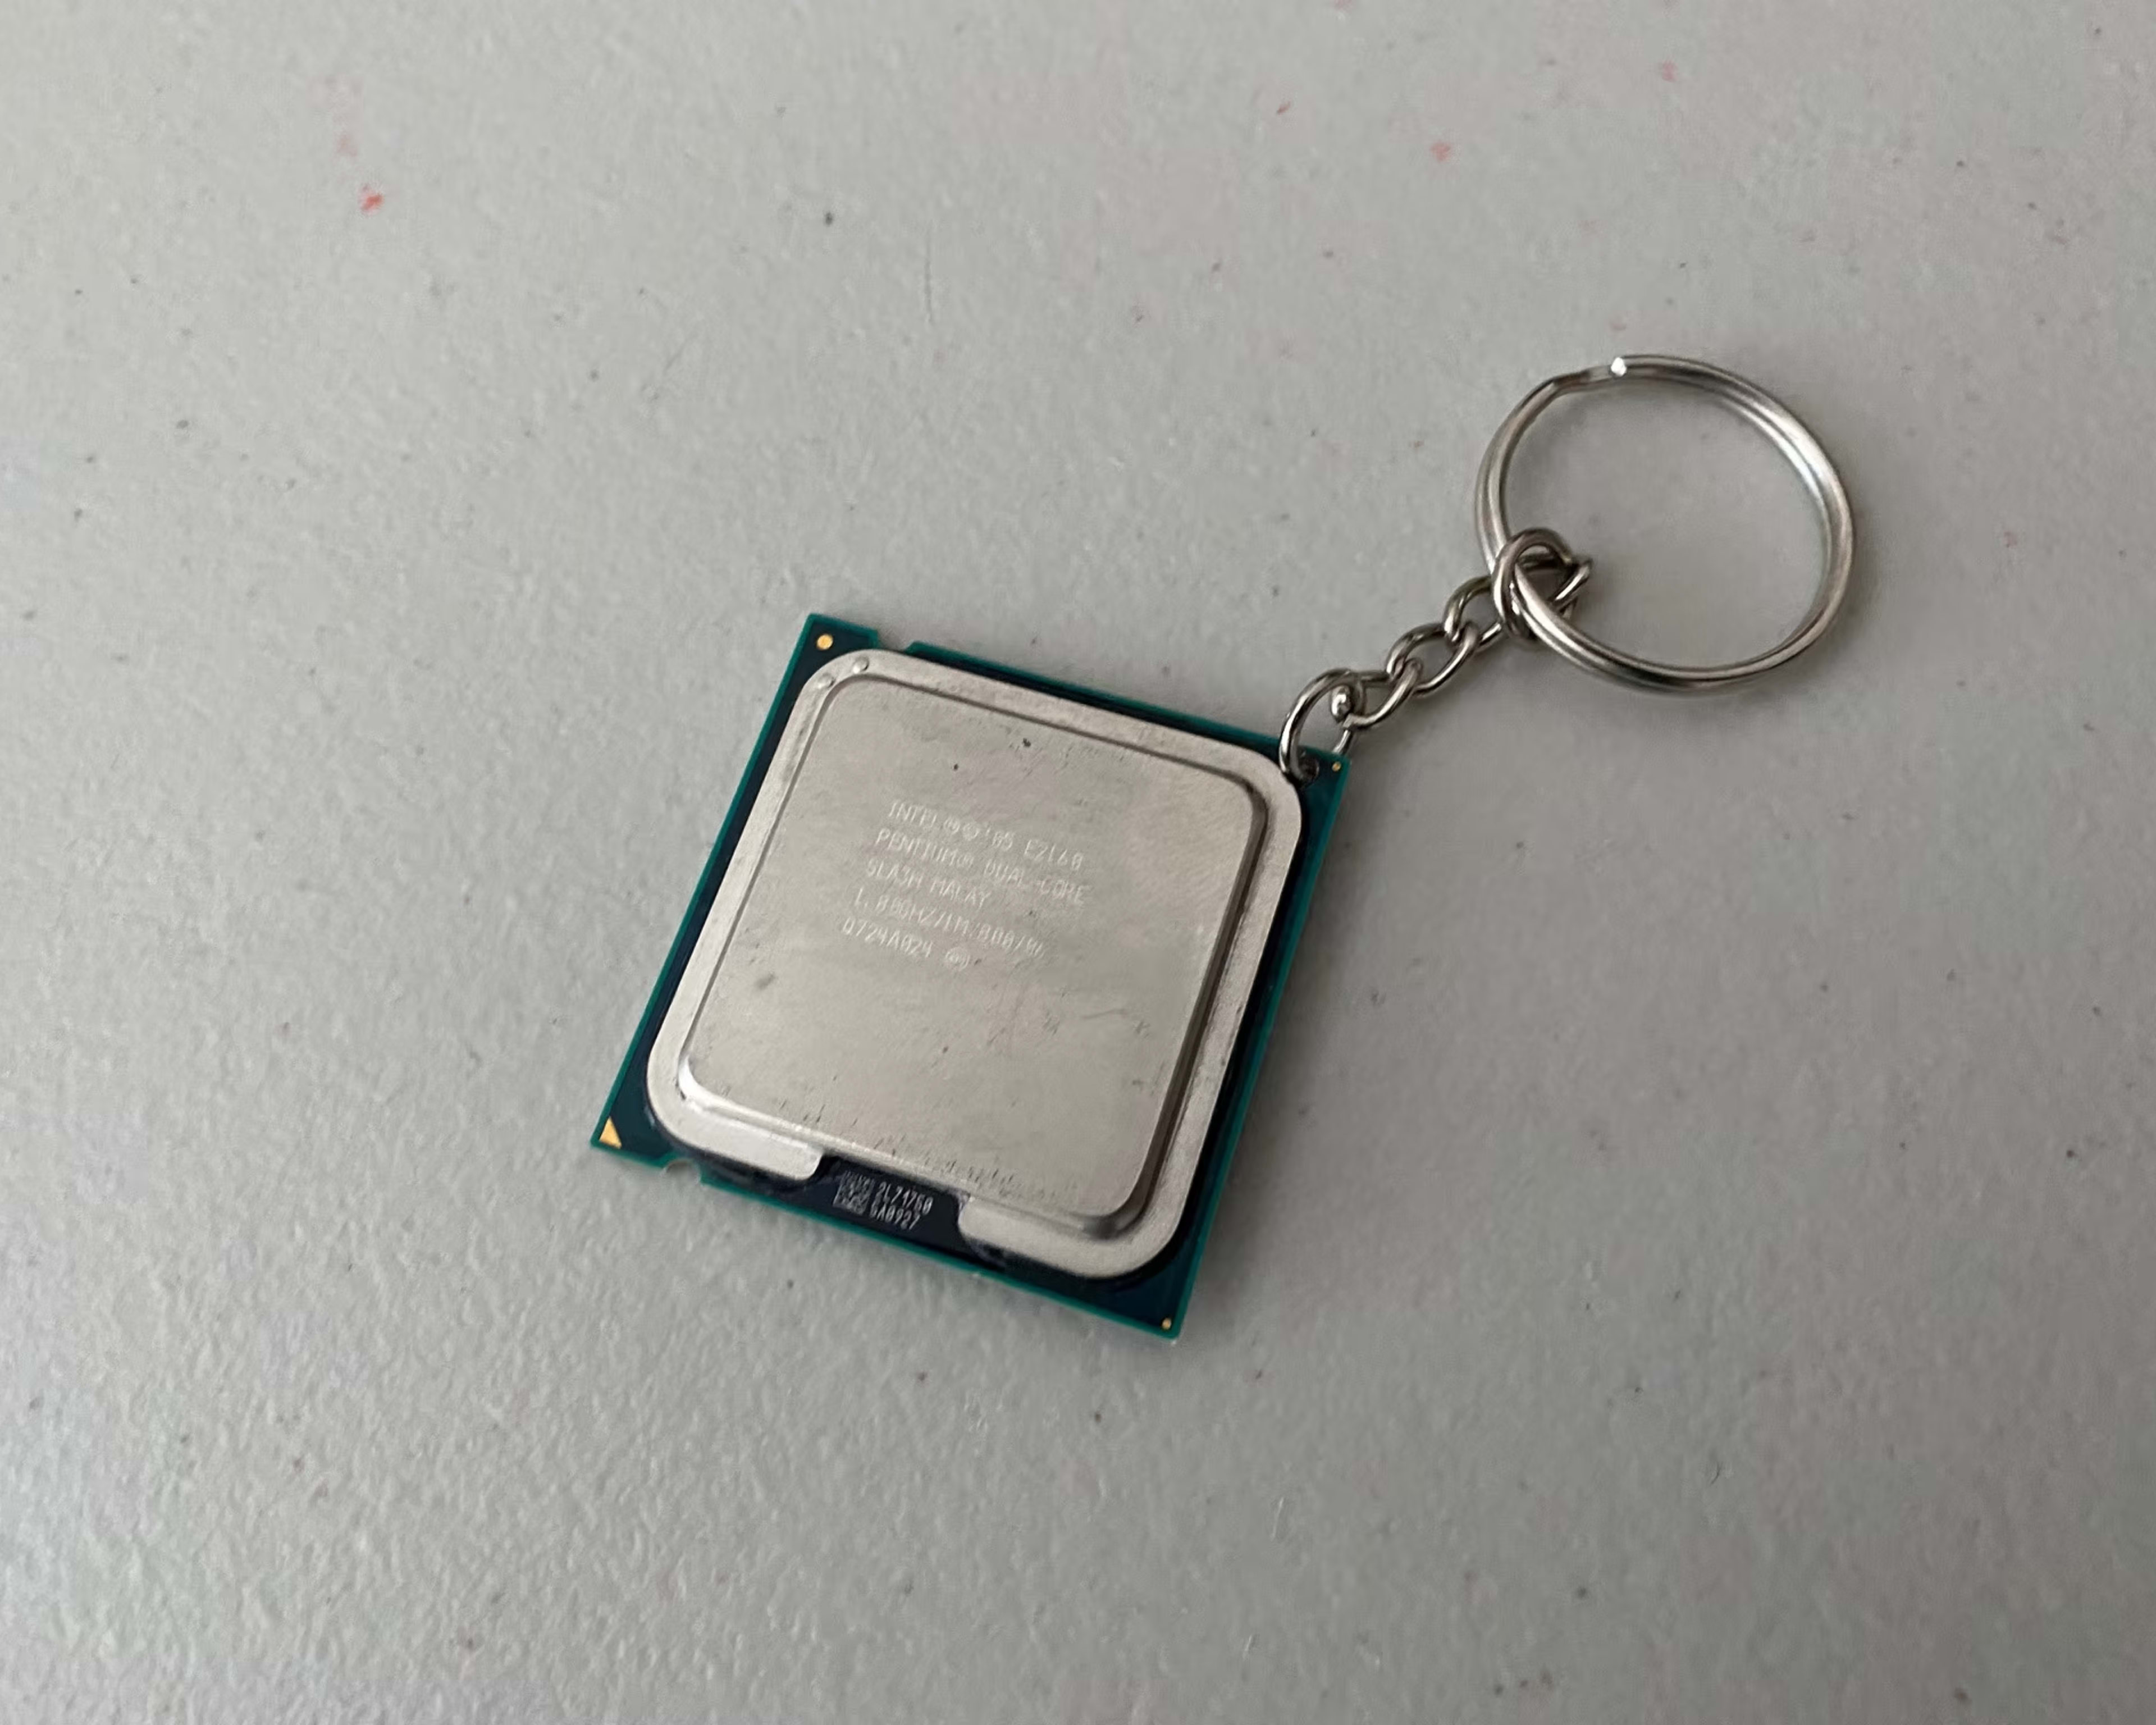 Intel Pentium E2160 CPU KEYCHAIN